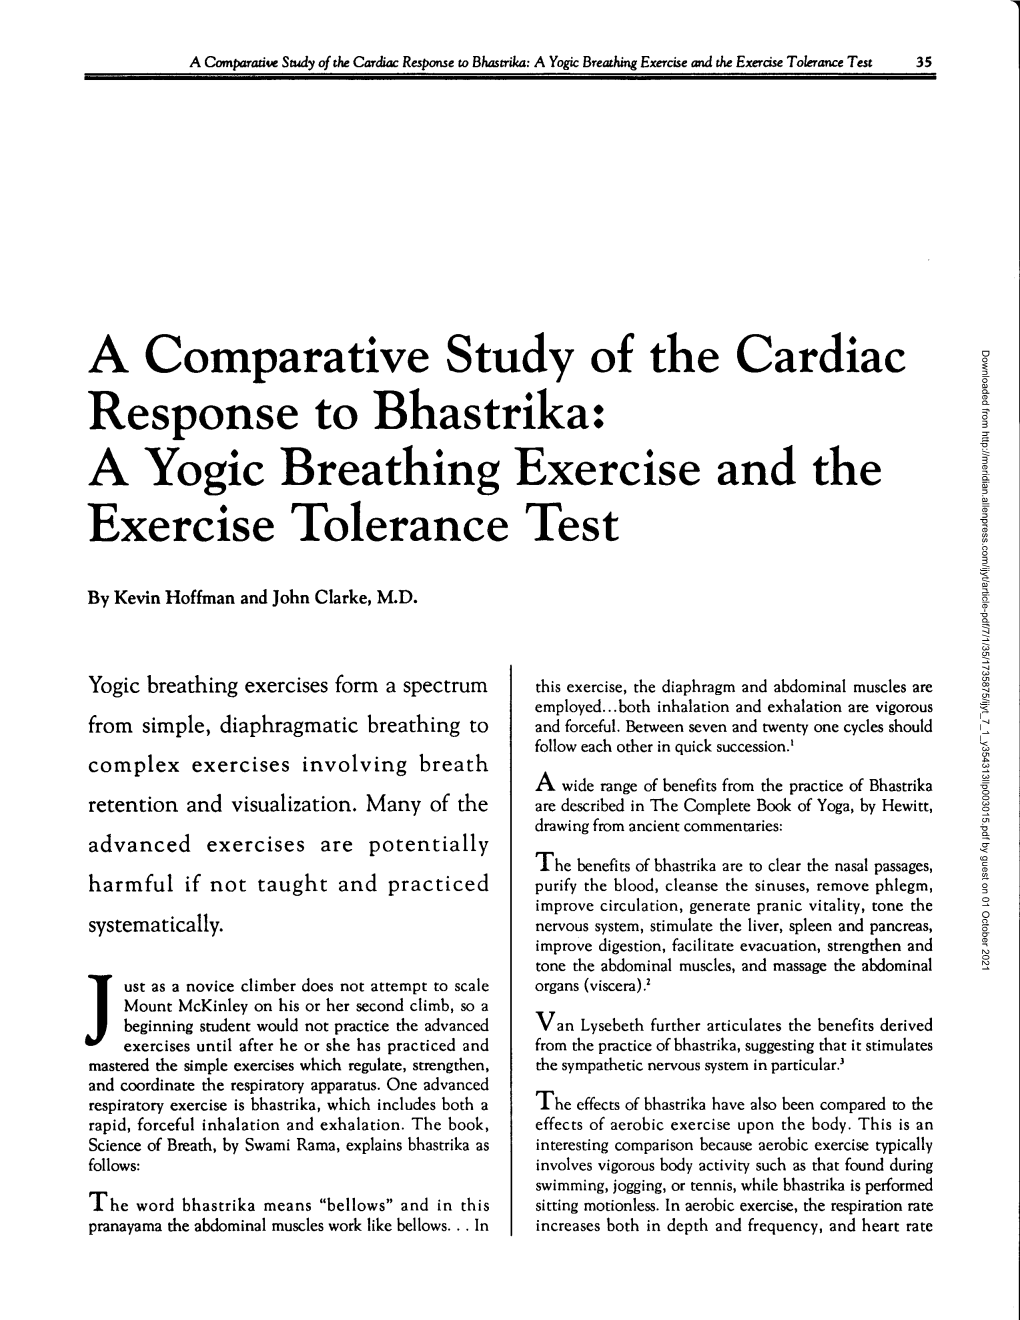 Response to Bhastrika: a Yogic Breathing Exercise and the Exercise Tolerance Test